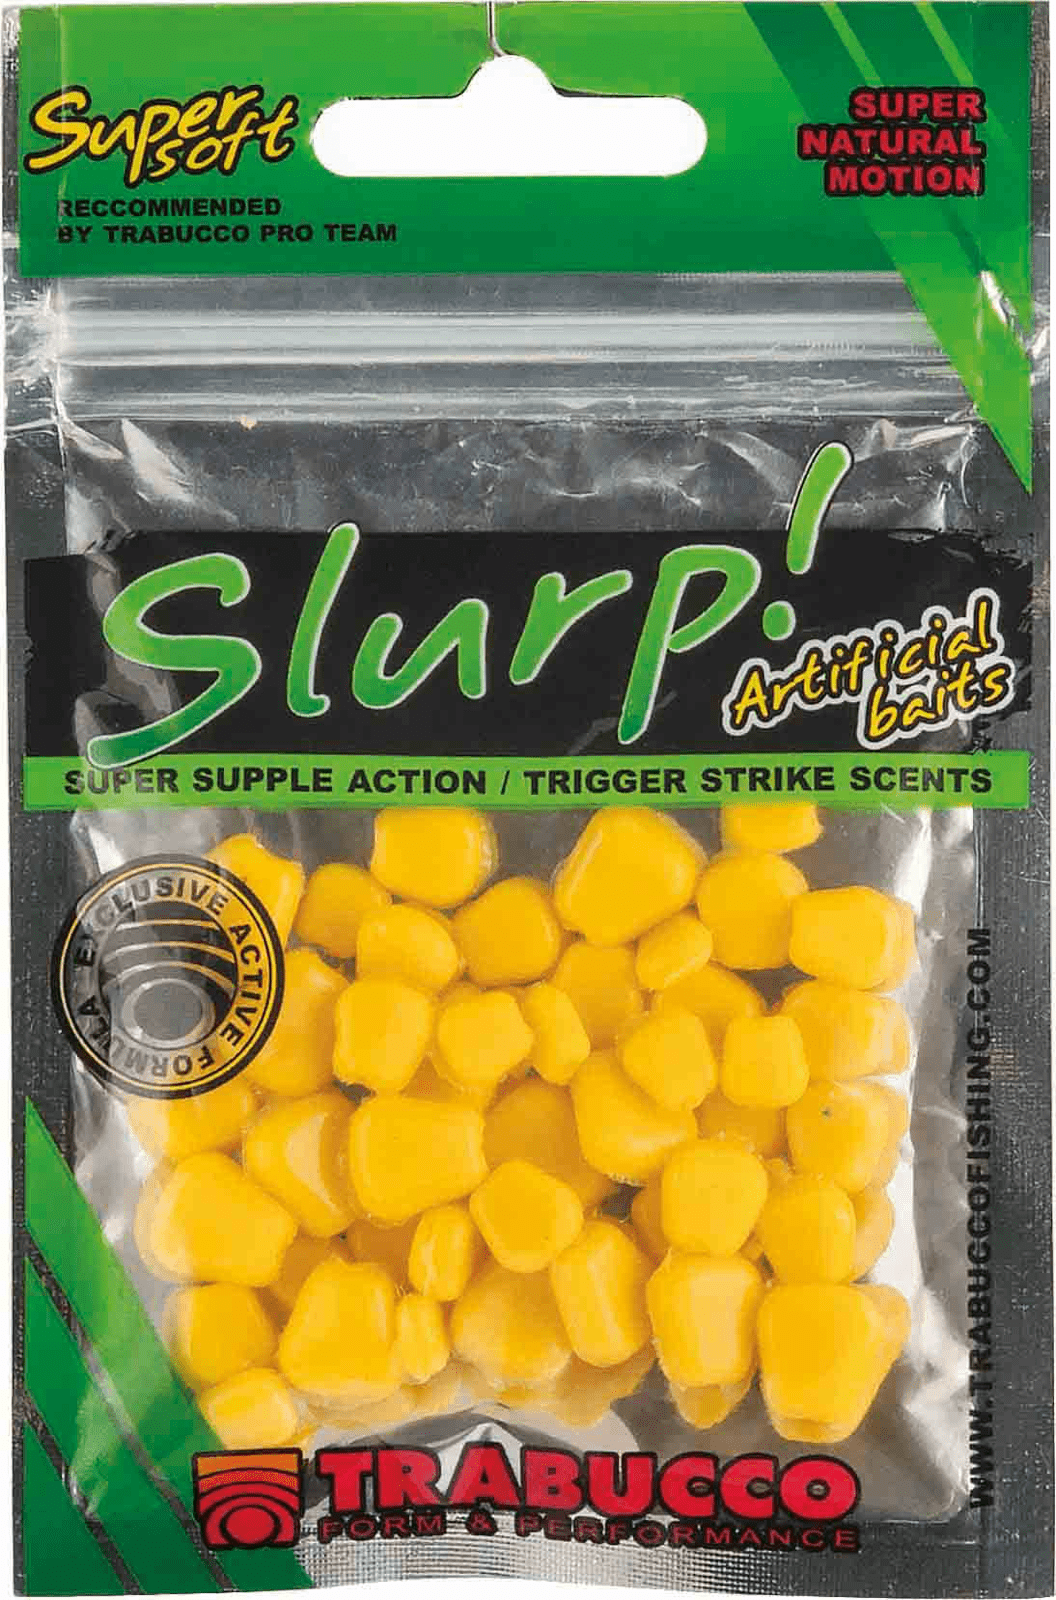 Trabucco slurp bait corn yellow